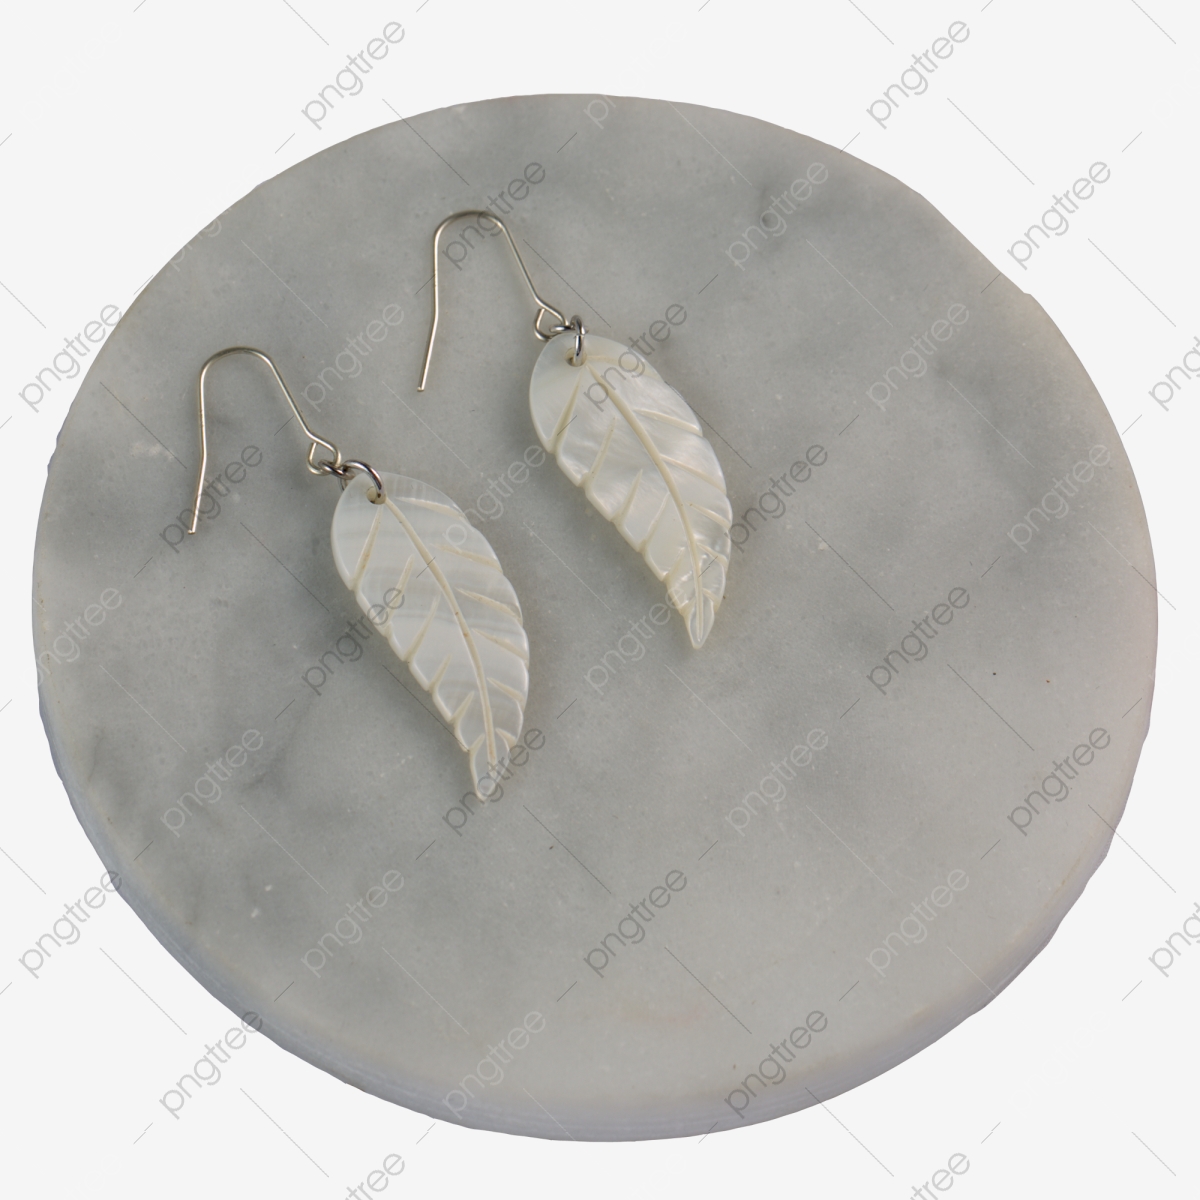 pngtree-female-earrings-in-the-shape-of-leaves-png-image_4406717.jpg